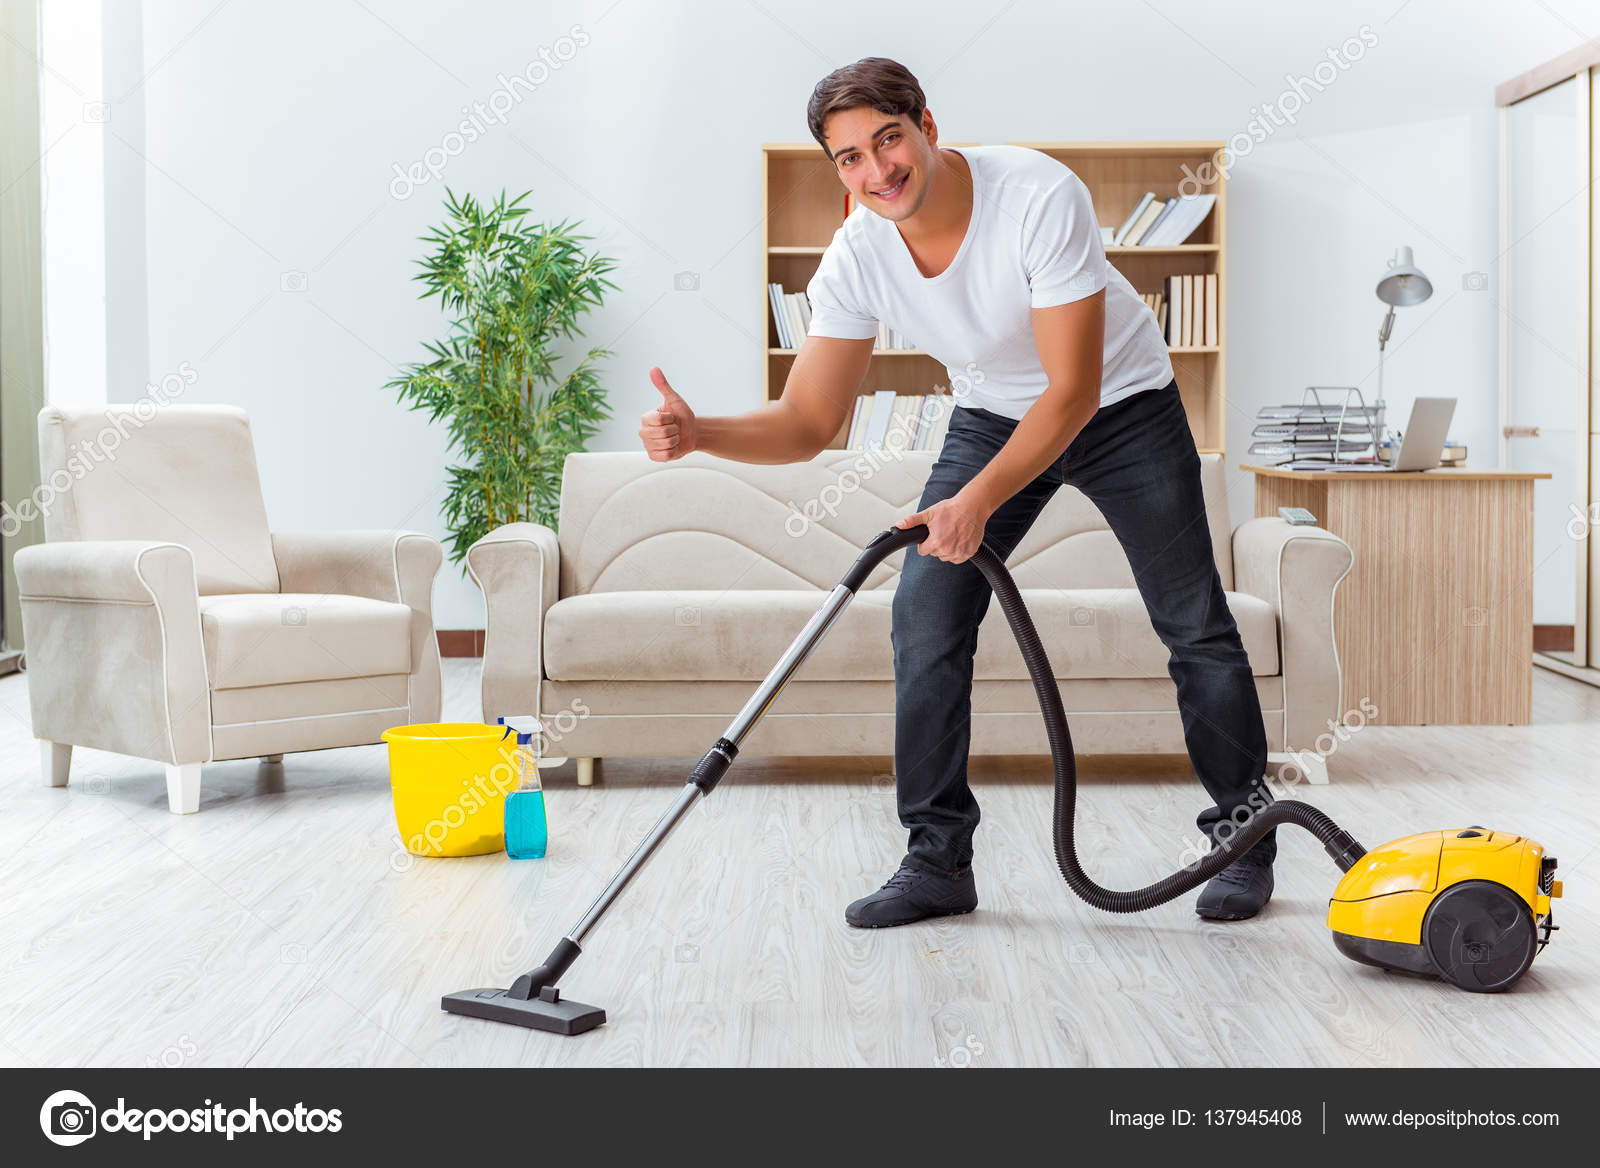 depositphotos_137945408-stock-photo-man-husband-cleaning-the-house.jpg